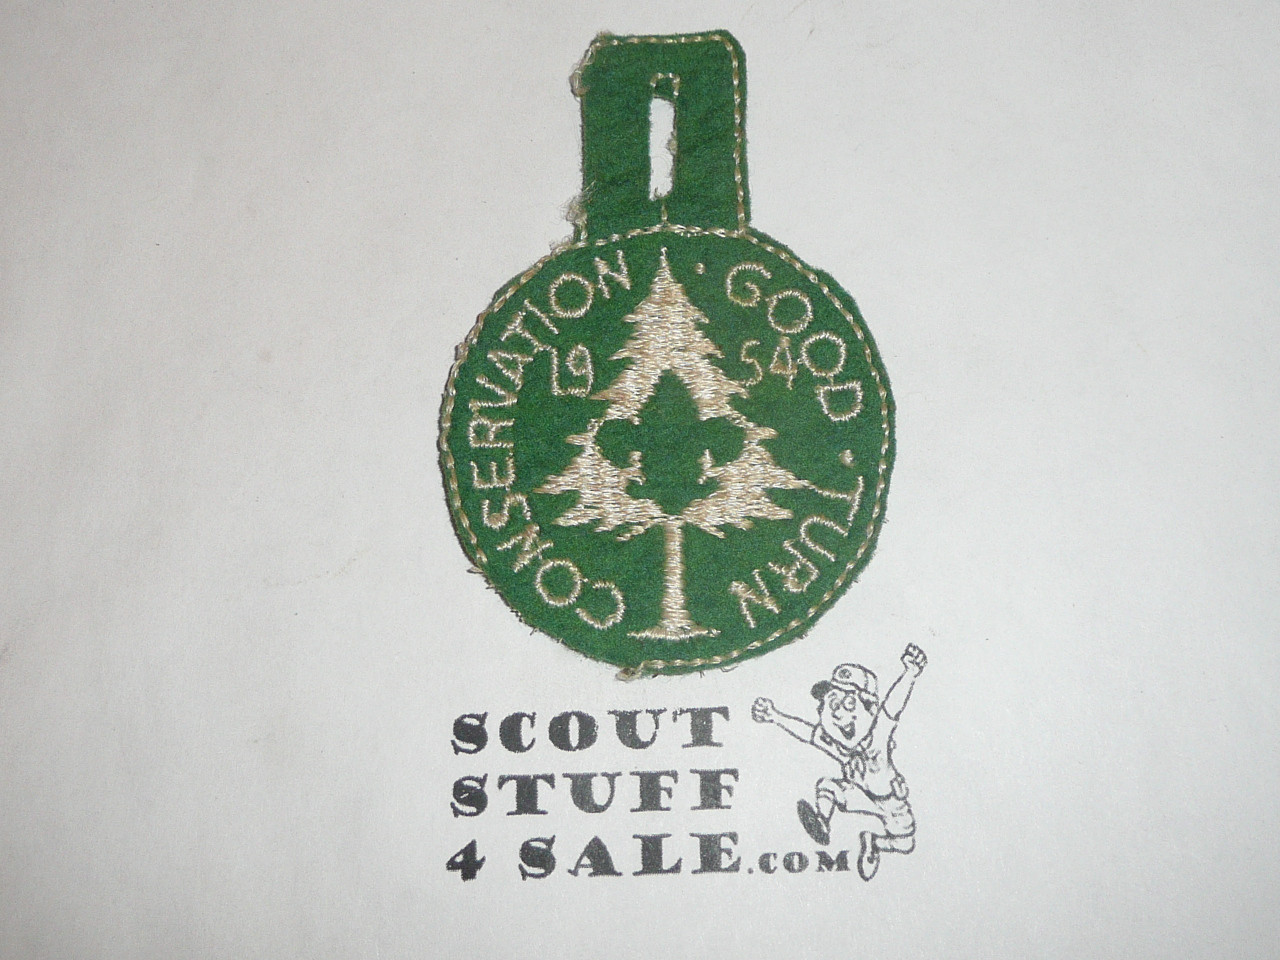 1954 Conservation Good Turn Felt Patch, Generic BSA issue, pocket hanger